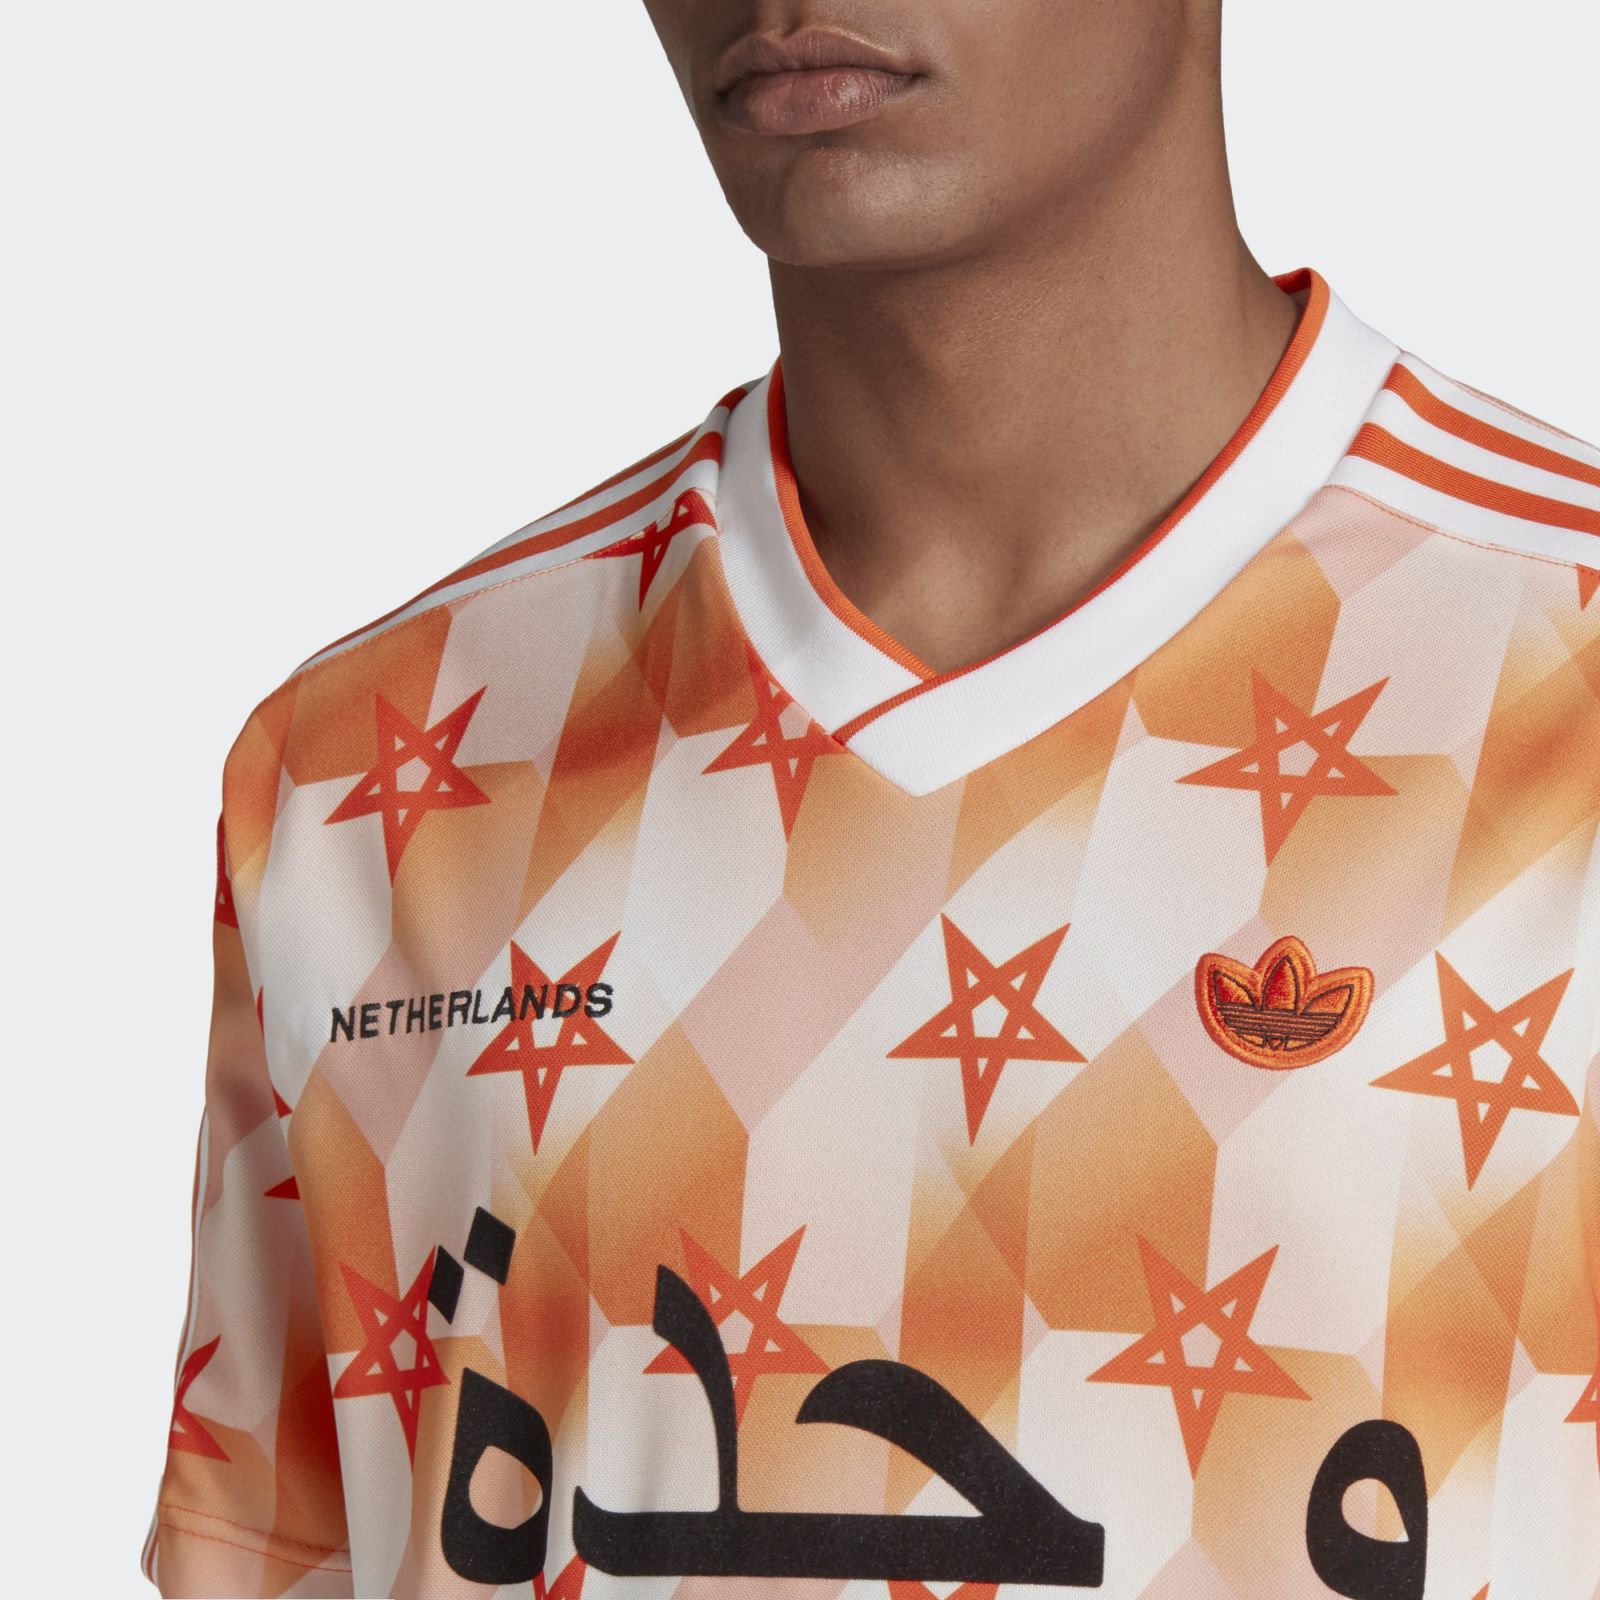 Adidas Netherlands Jersey - Orange | Lifestyle | Football shirt blog